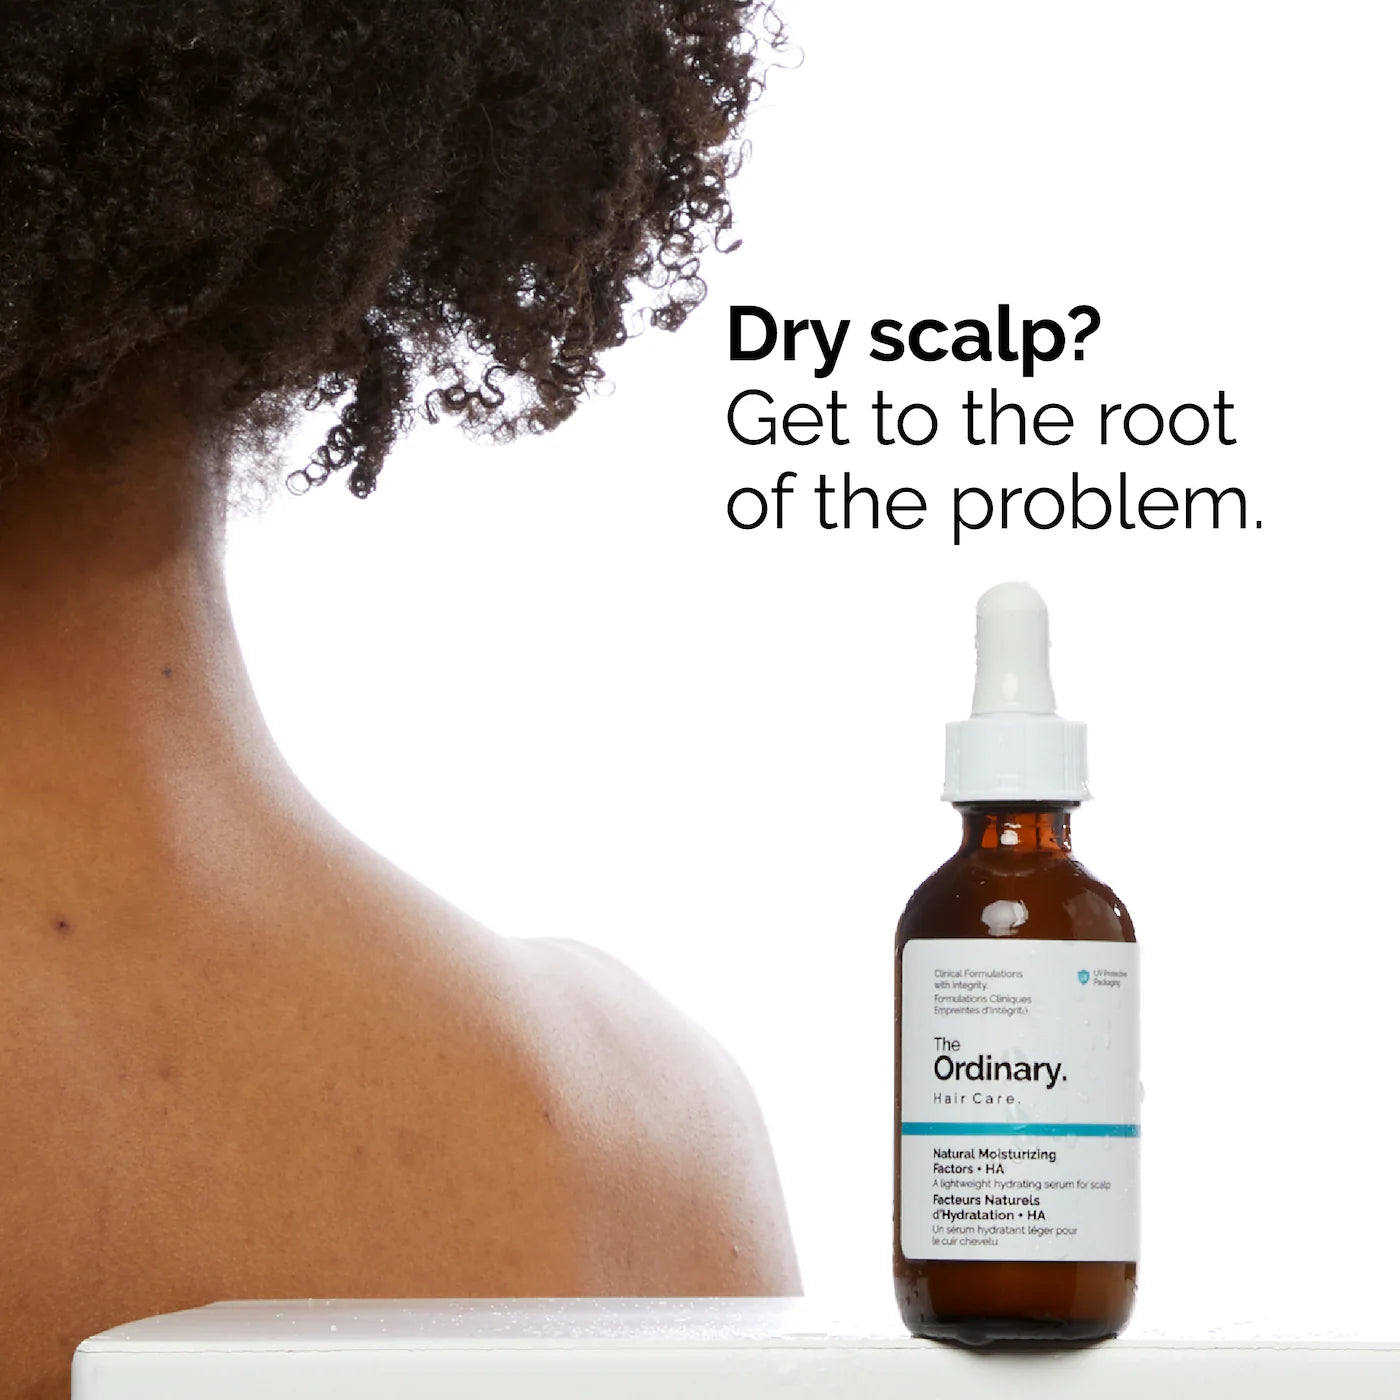 The Ordinary Hair Care Natural Moisturizing Factors + HA Hydrating Scalp Serum 60 ml